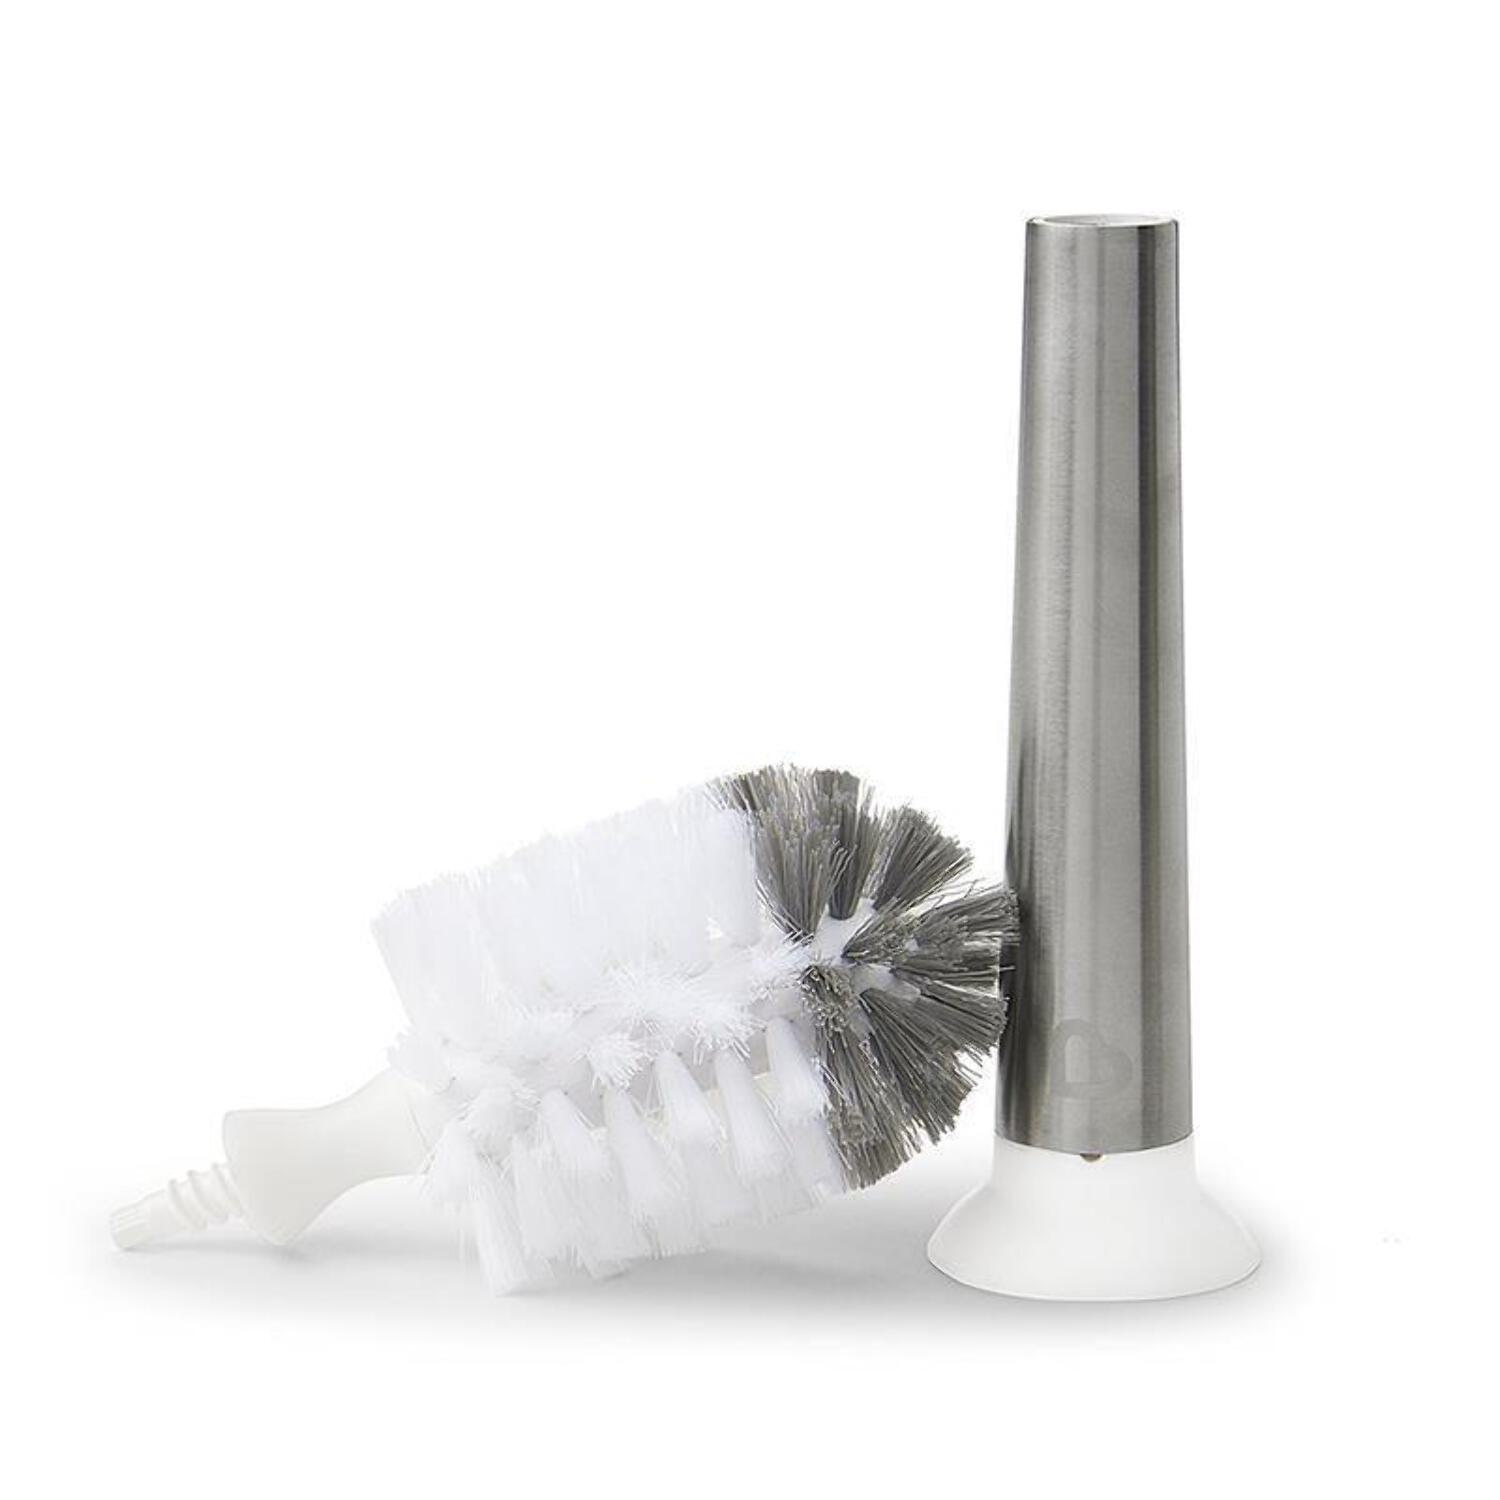 Munchkin® Shine™ Stainless Steel Bottle Brush and Refill Brush Head, Gray - image 5 of 9